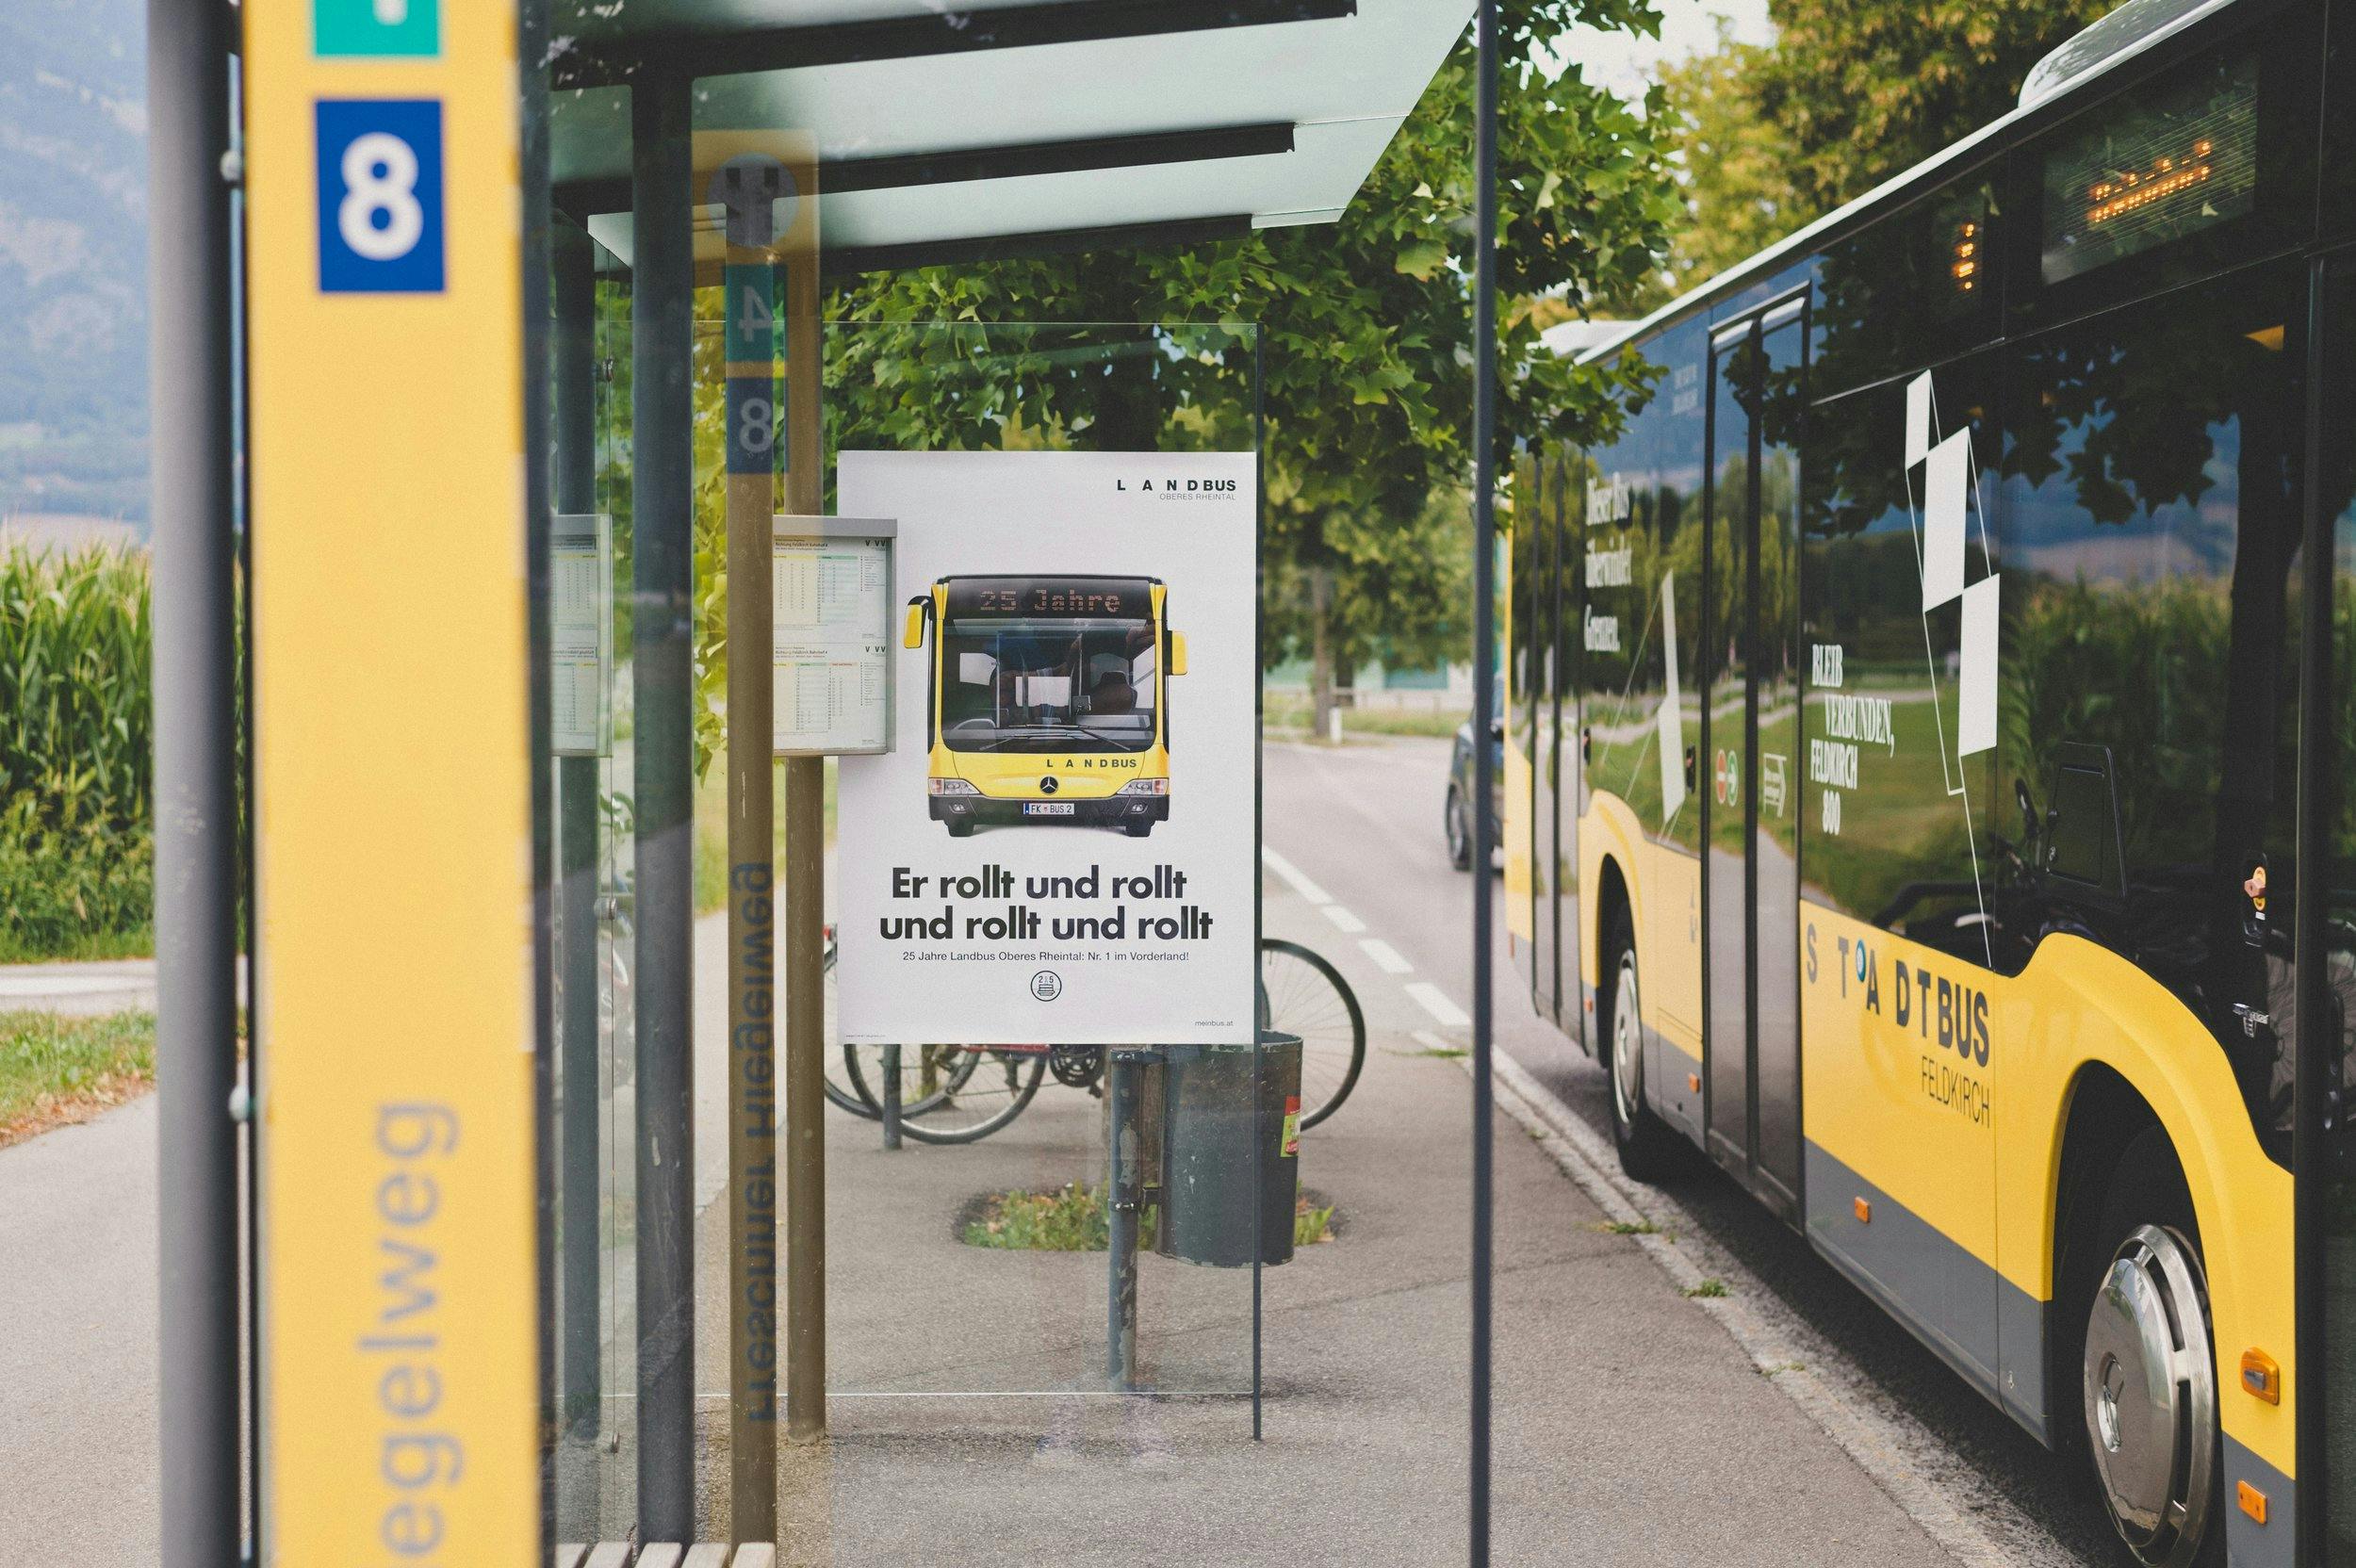 Stadt-Landbus-25-Jahre_Plakat-Bushaltestelle © Patricia Keckeis